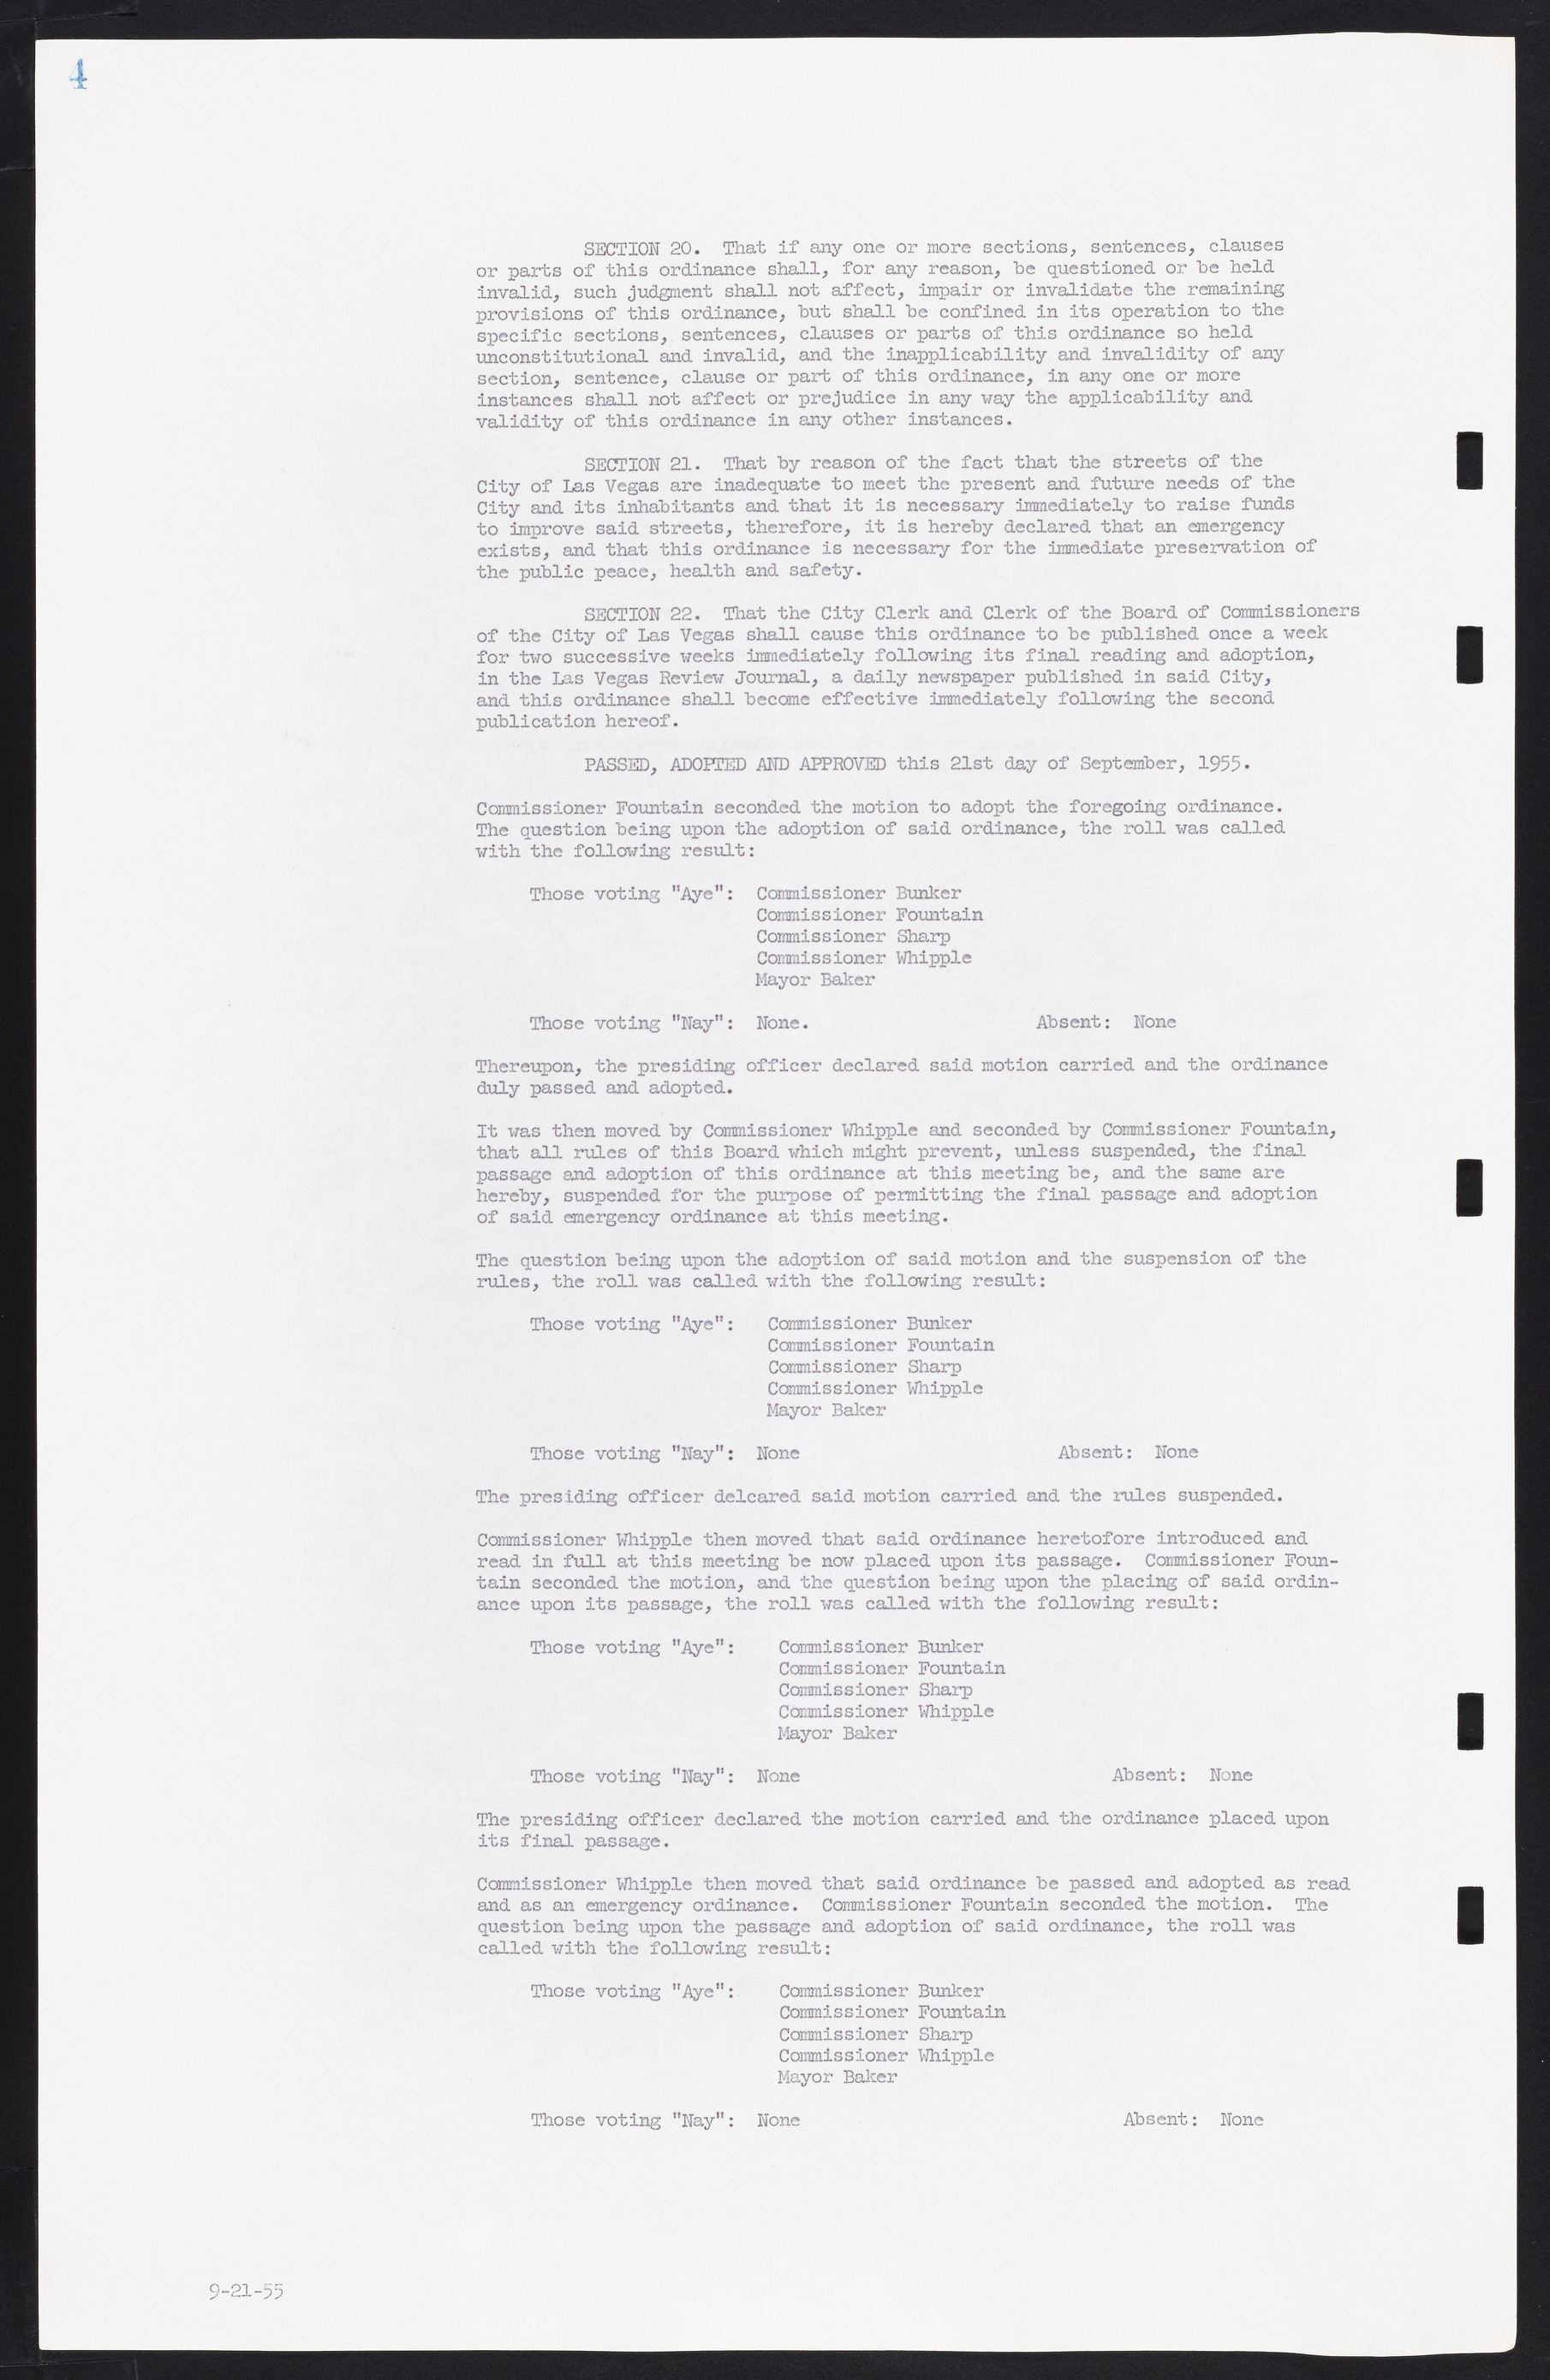 Las Vegas City Commission Minutes, September 21, 1955 to November 20, 1957, lvc000010-10